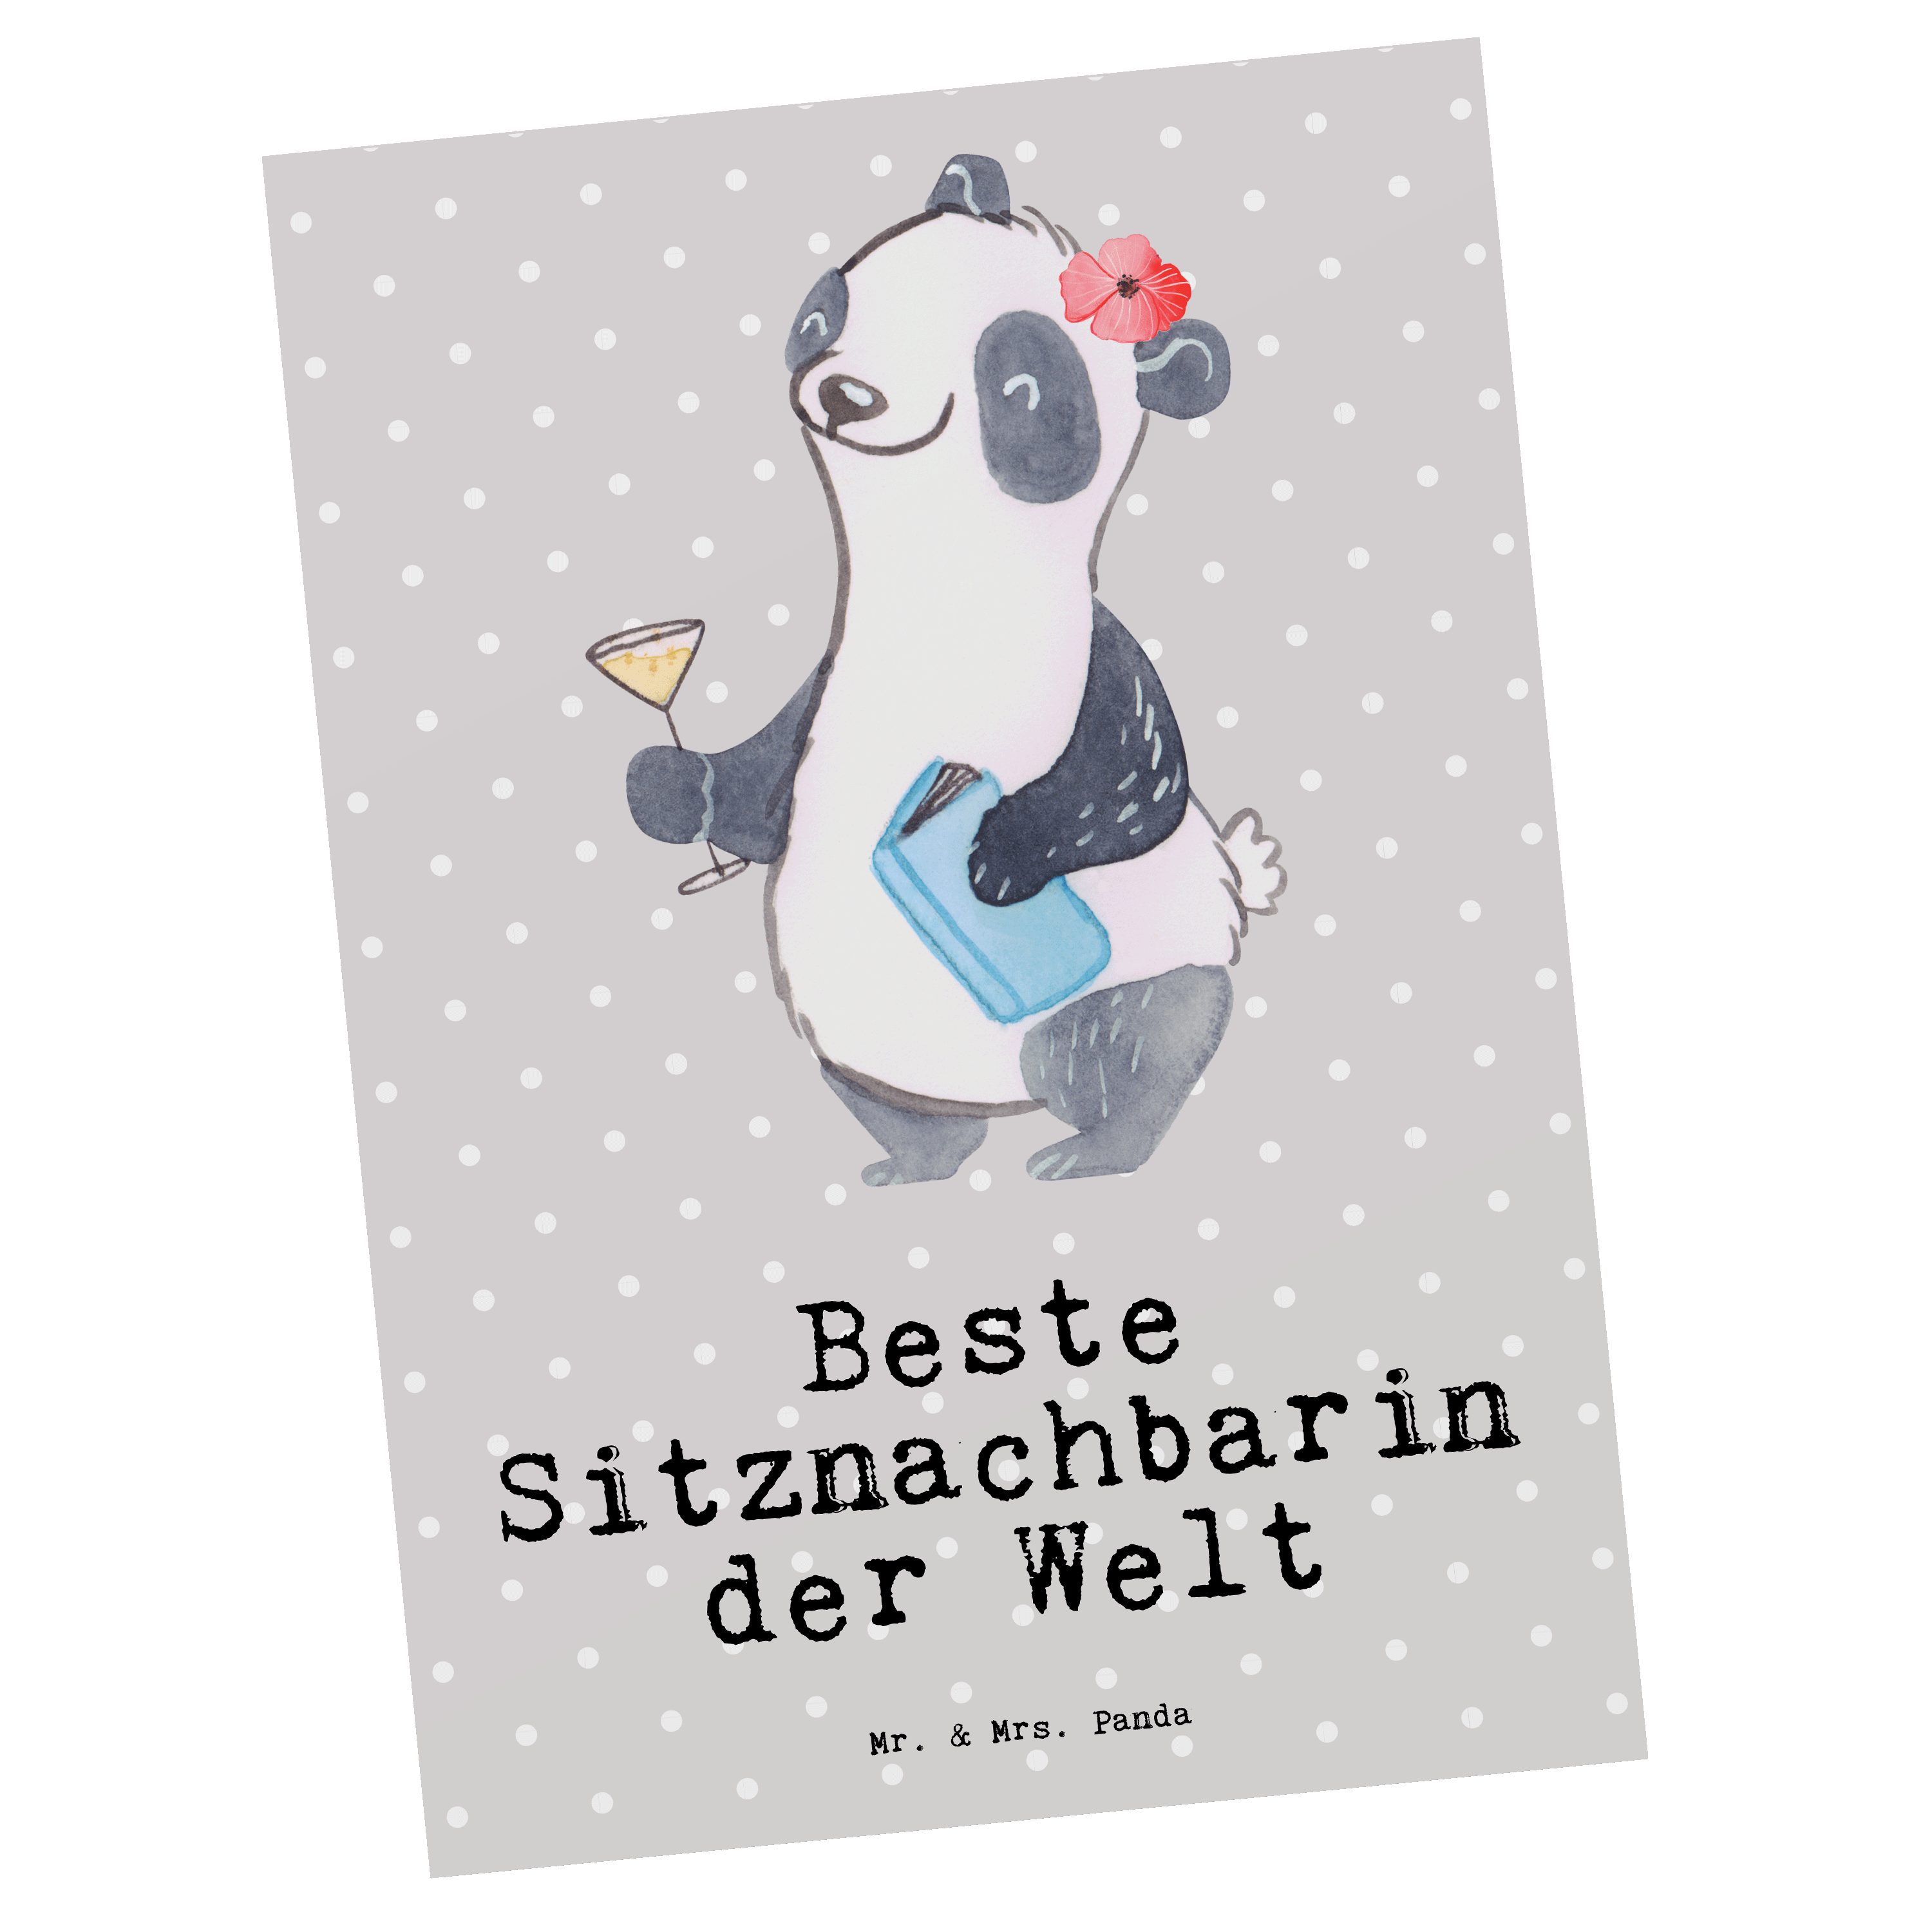 Mrs. Geschen - Mr. Geschenk, der Panda Grau - & Beste Sitznachbarin Postkarte Panda Welt Pastell